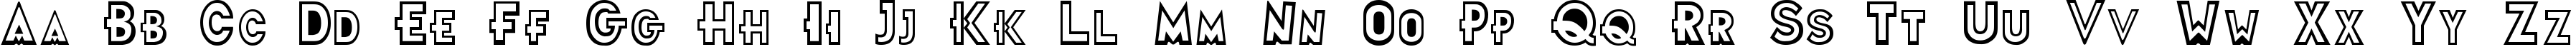 Пример написания английского алфавита шрифтом Futurama Title Font